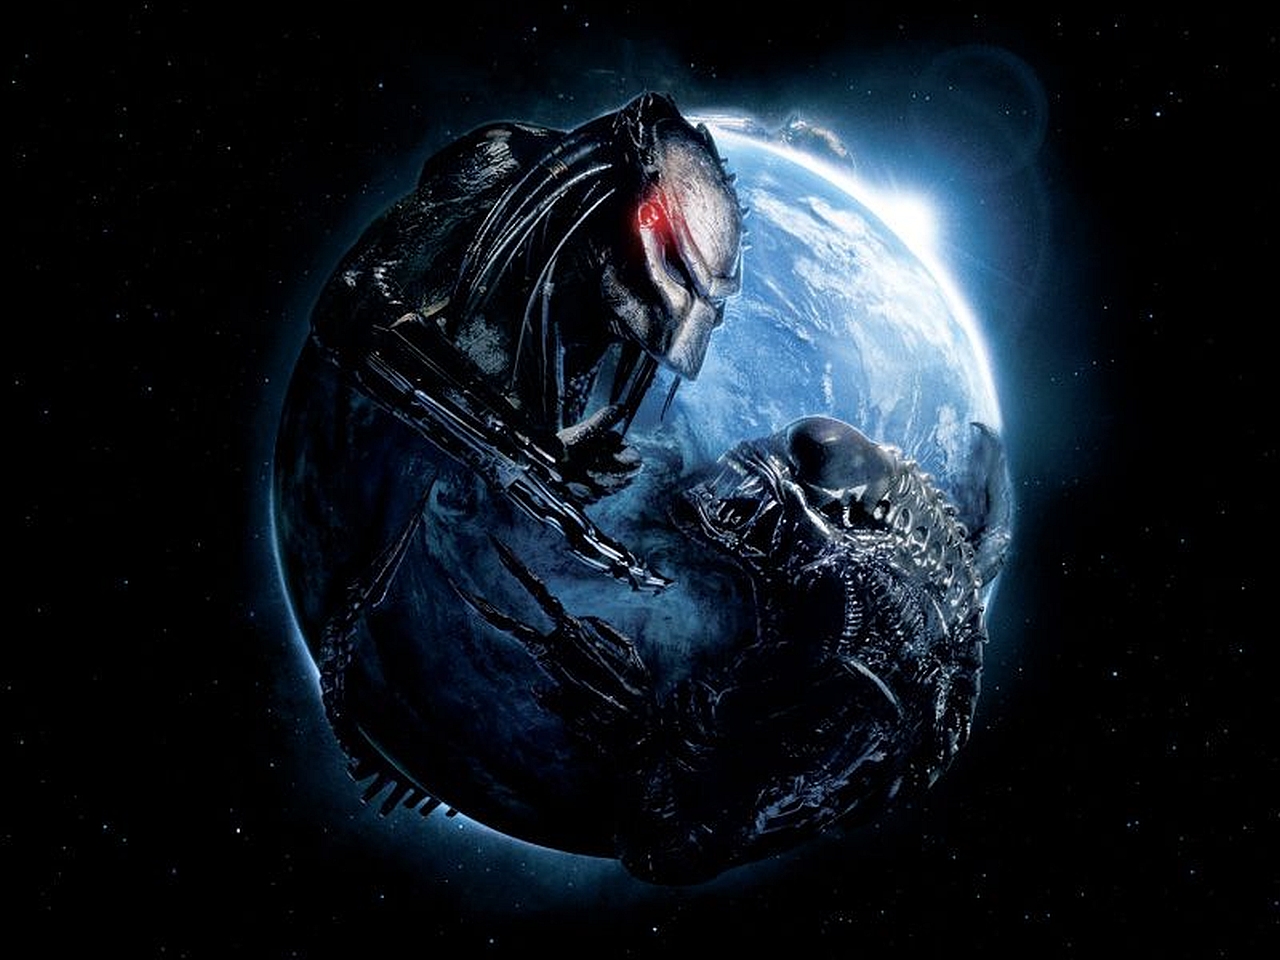 Alien Vs Predator Requiem Right Click And Choose Set As Wallpaper